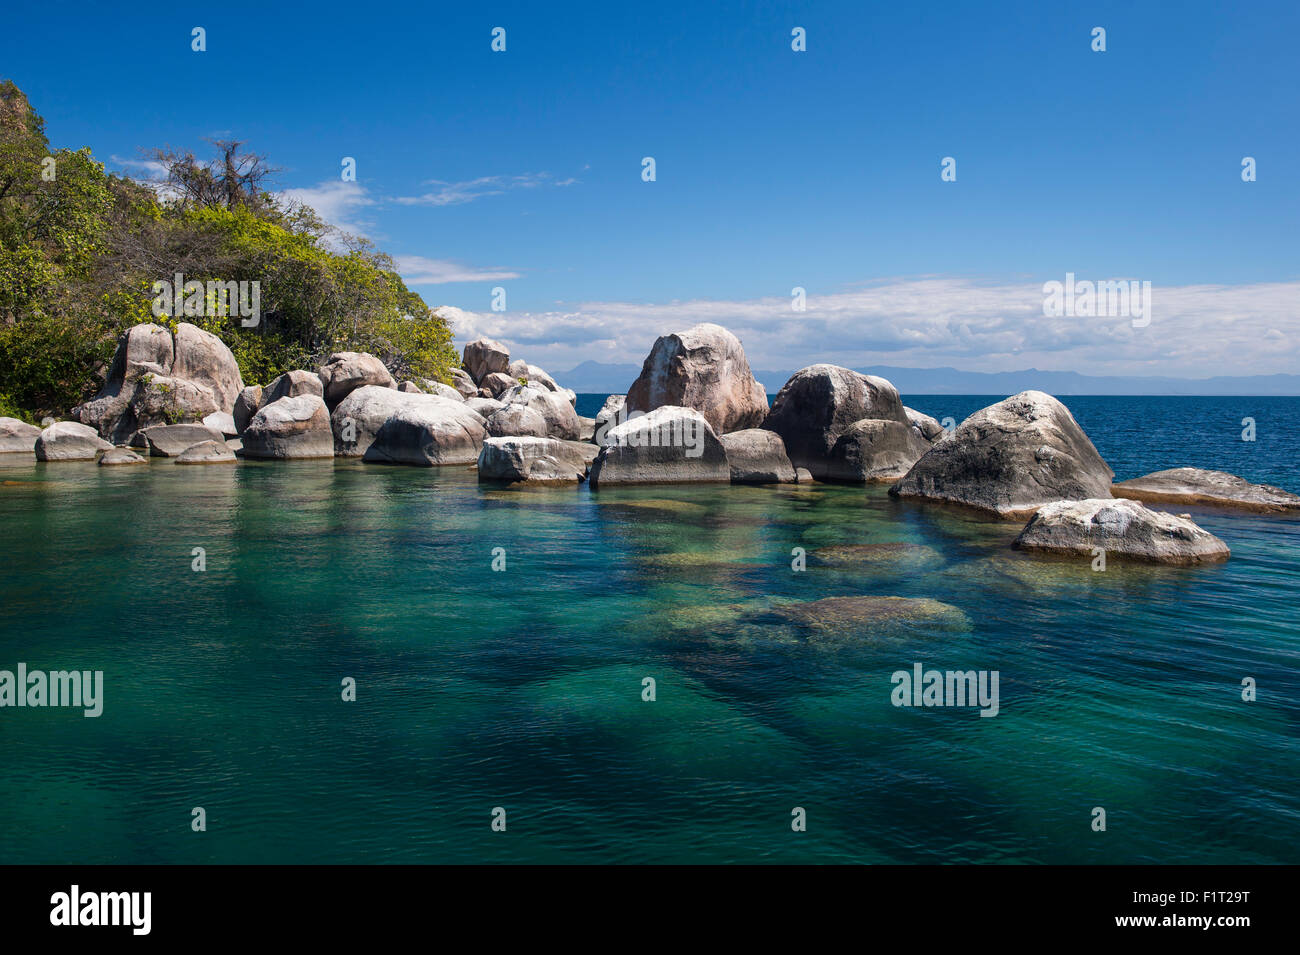 Türkis klarem Wasser und Granit Felsen, Mumbo Island, Cape Maclear, Lake Malawi, Malawi, Afrika Stockfoto